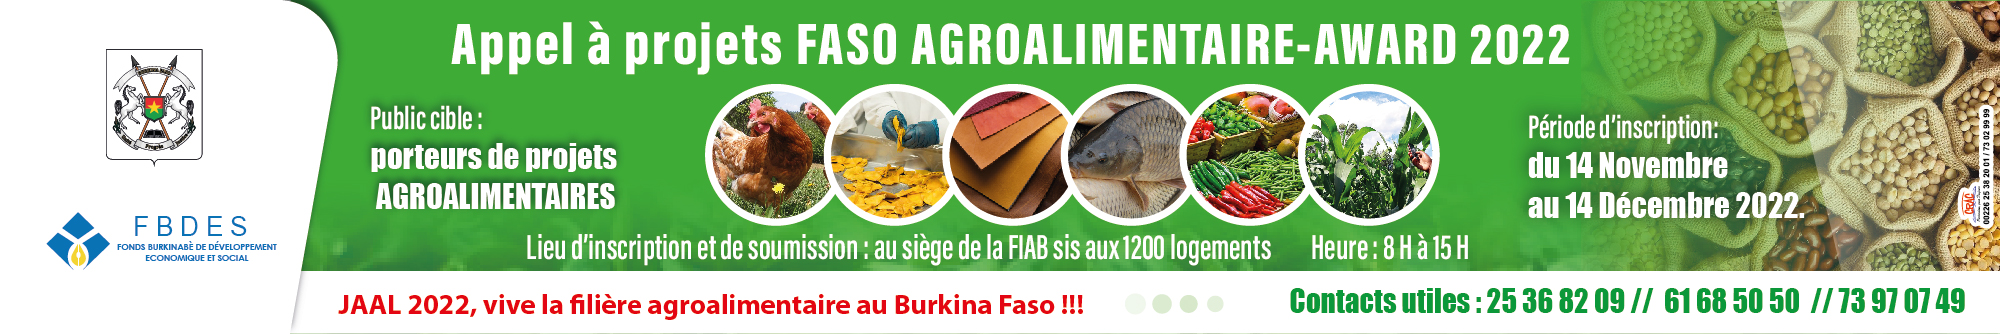 Spot appel à projet FASO AGROALIMENTAIRE AWARD 2022